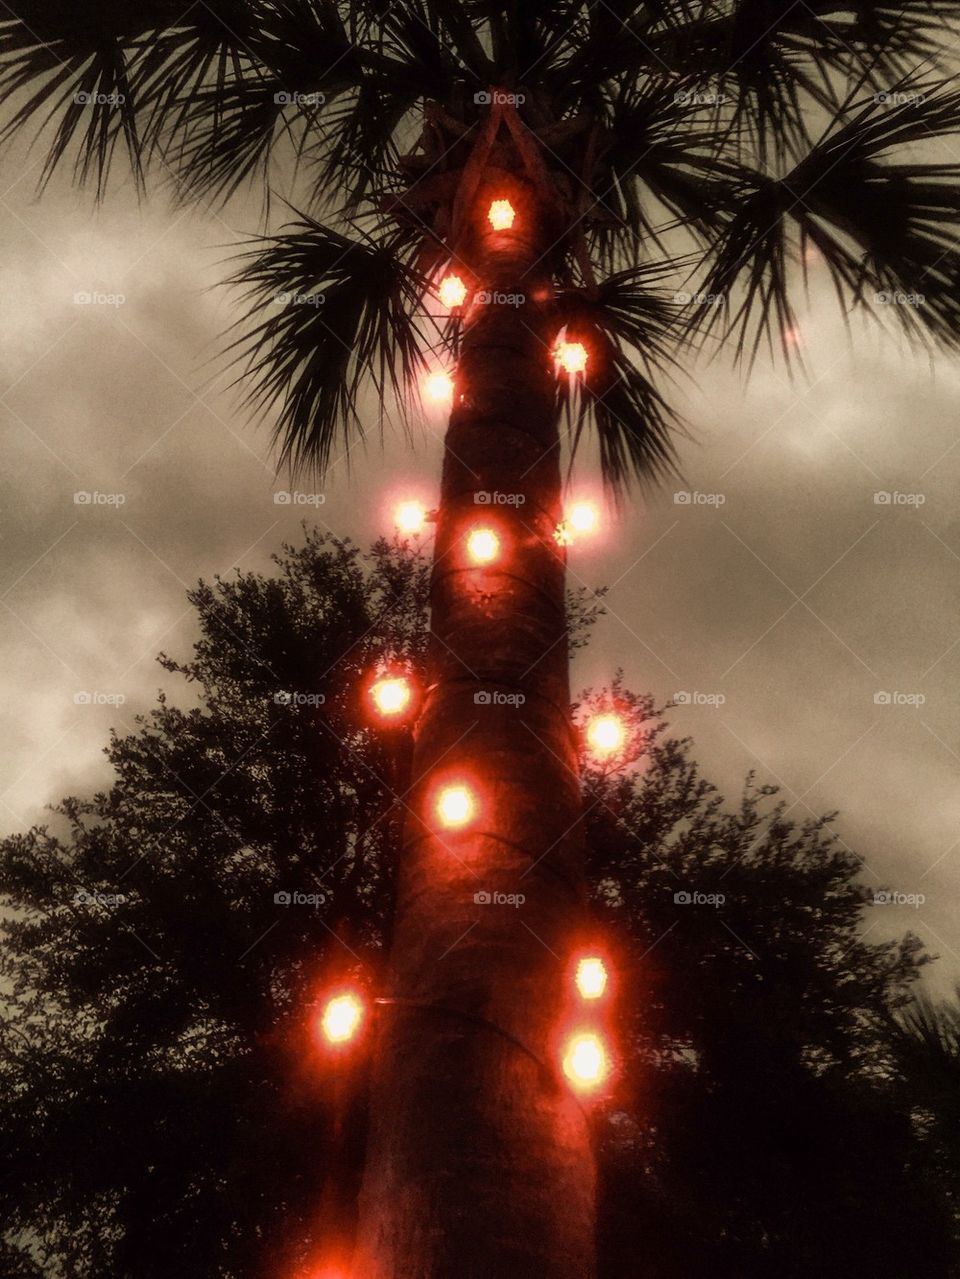 Carmine Palm Christmas Tree 